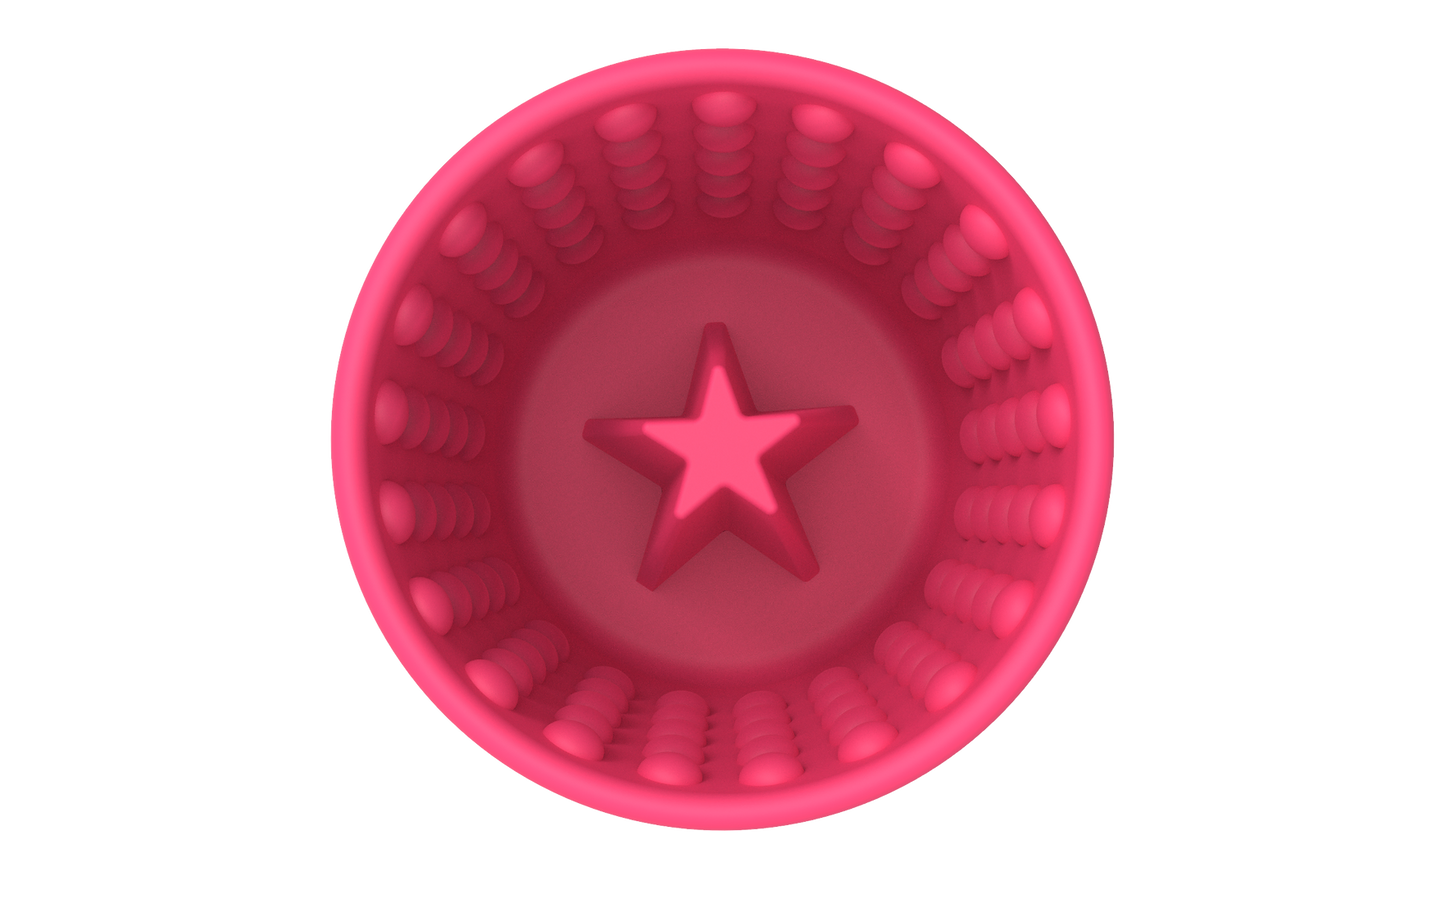 LICKIMAT® - Schleckmatte Yoggie Pot TM rosa